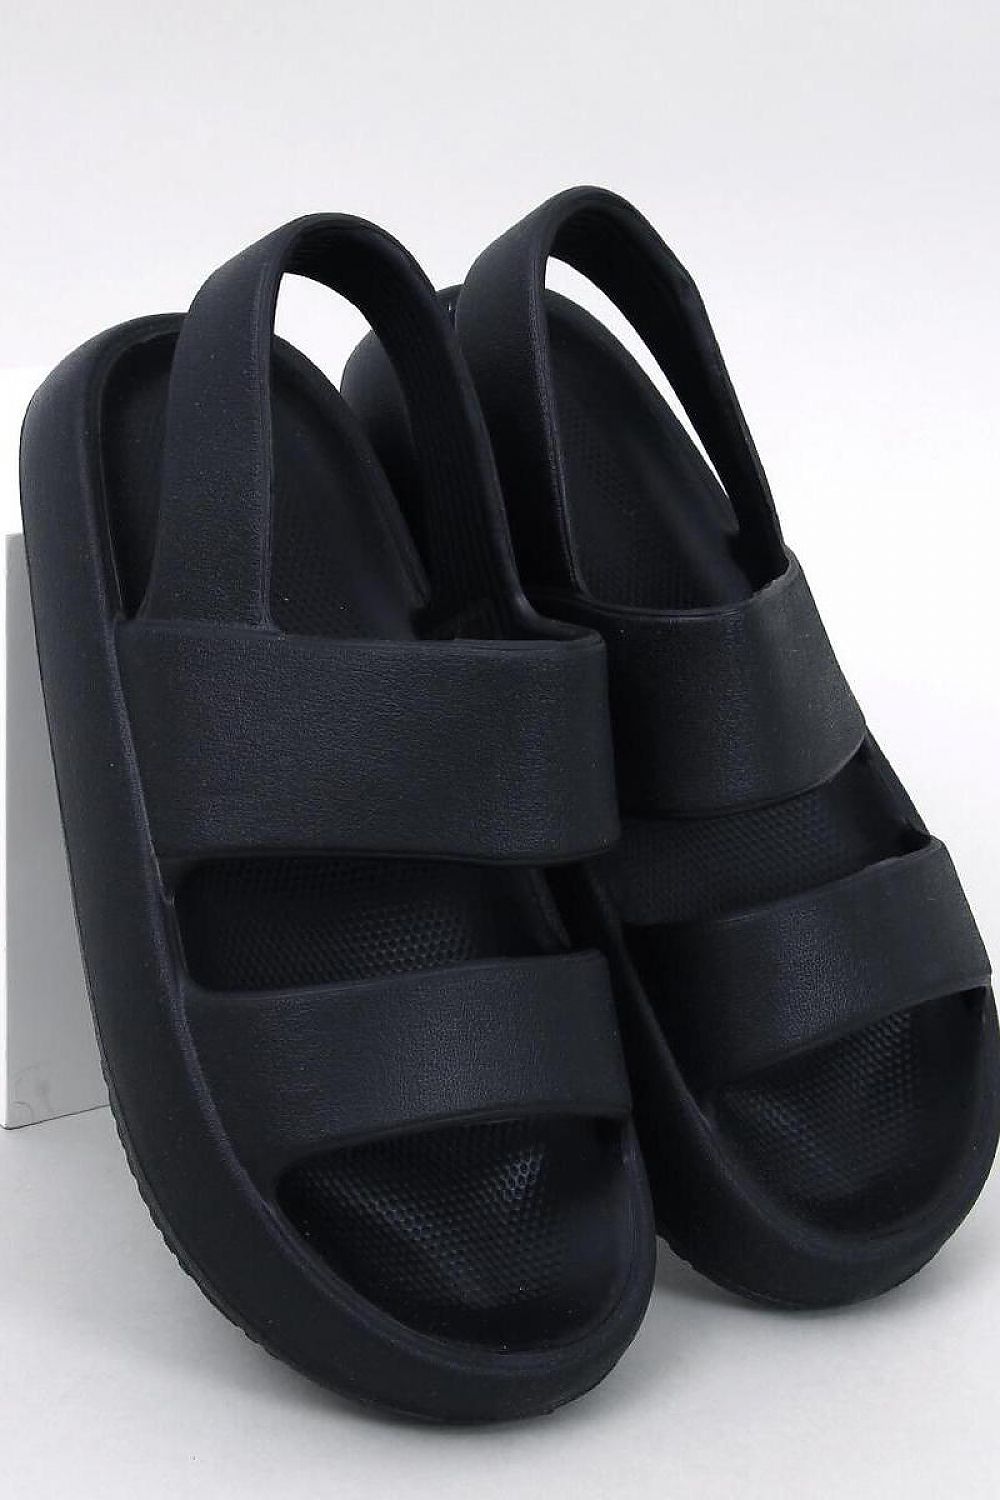 TEEK - Black Rubber Strapped Sandals SHOES TEEK Trend   